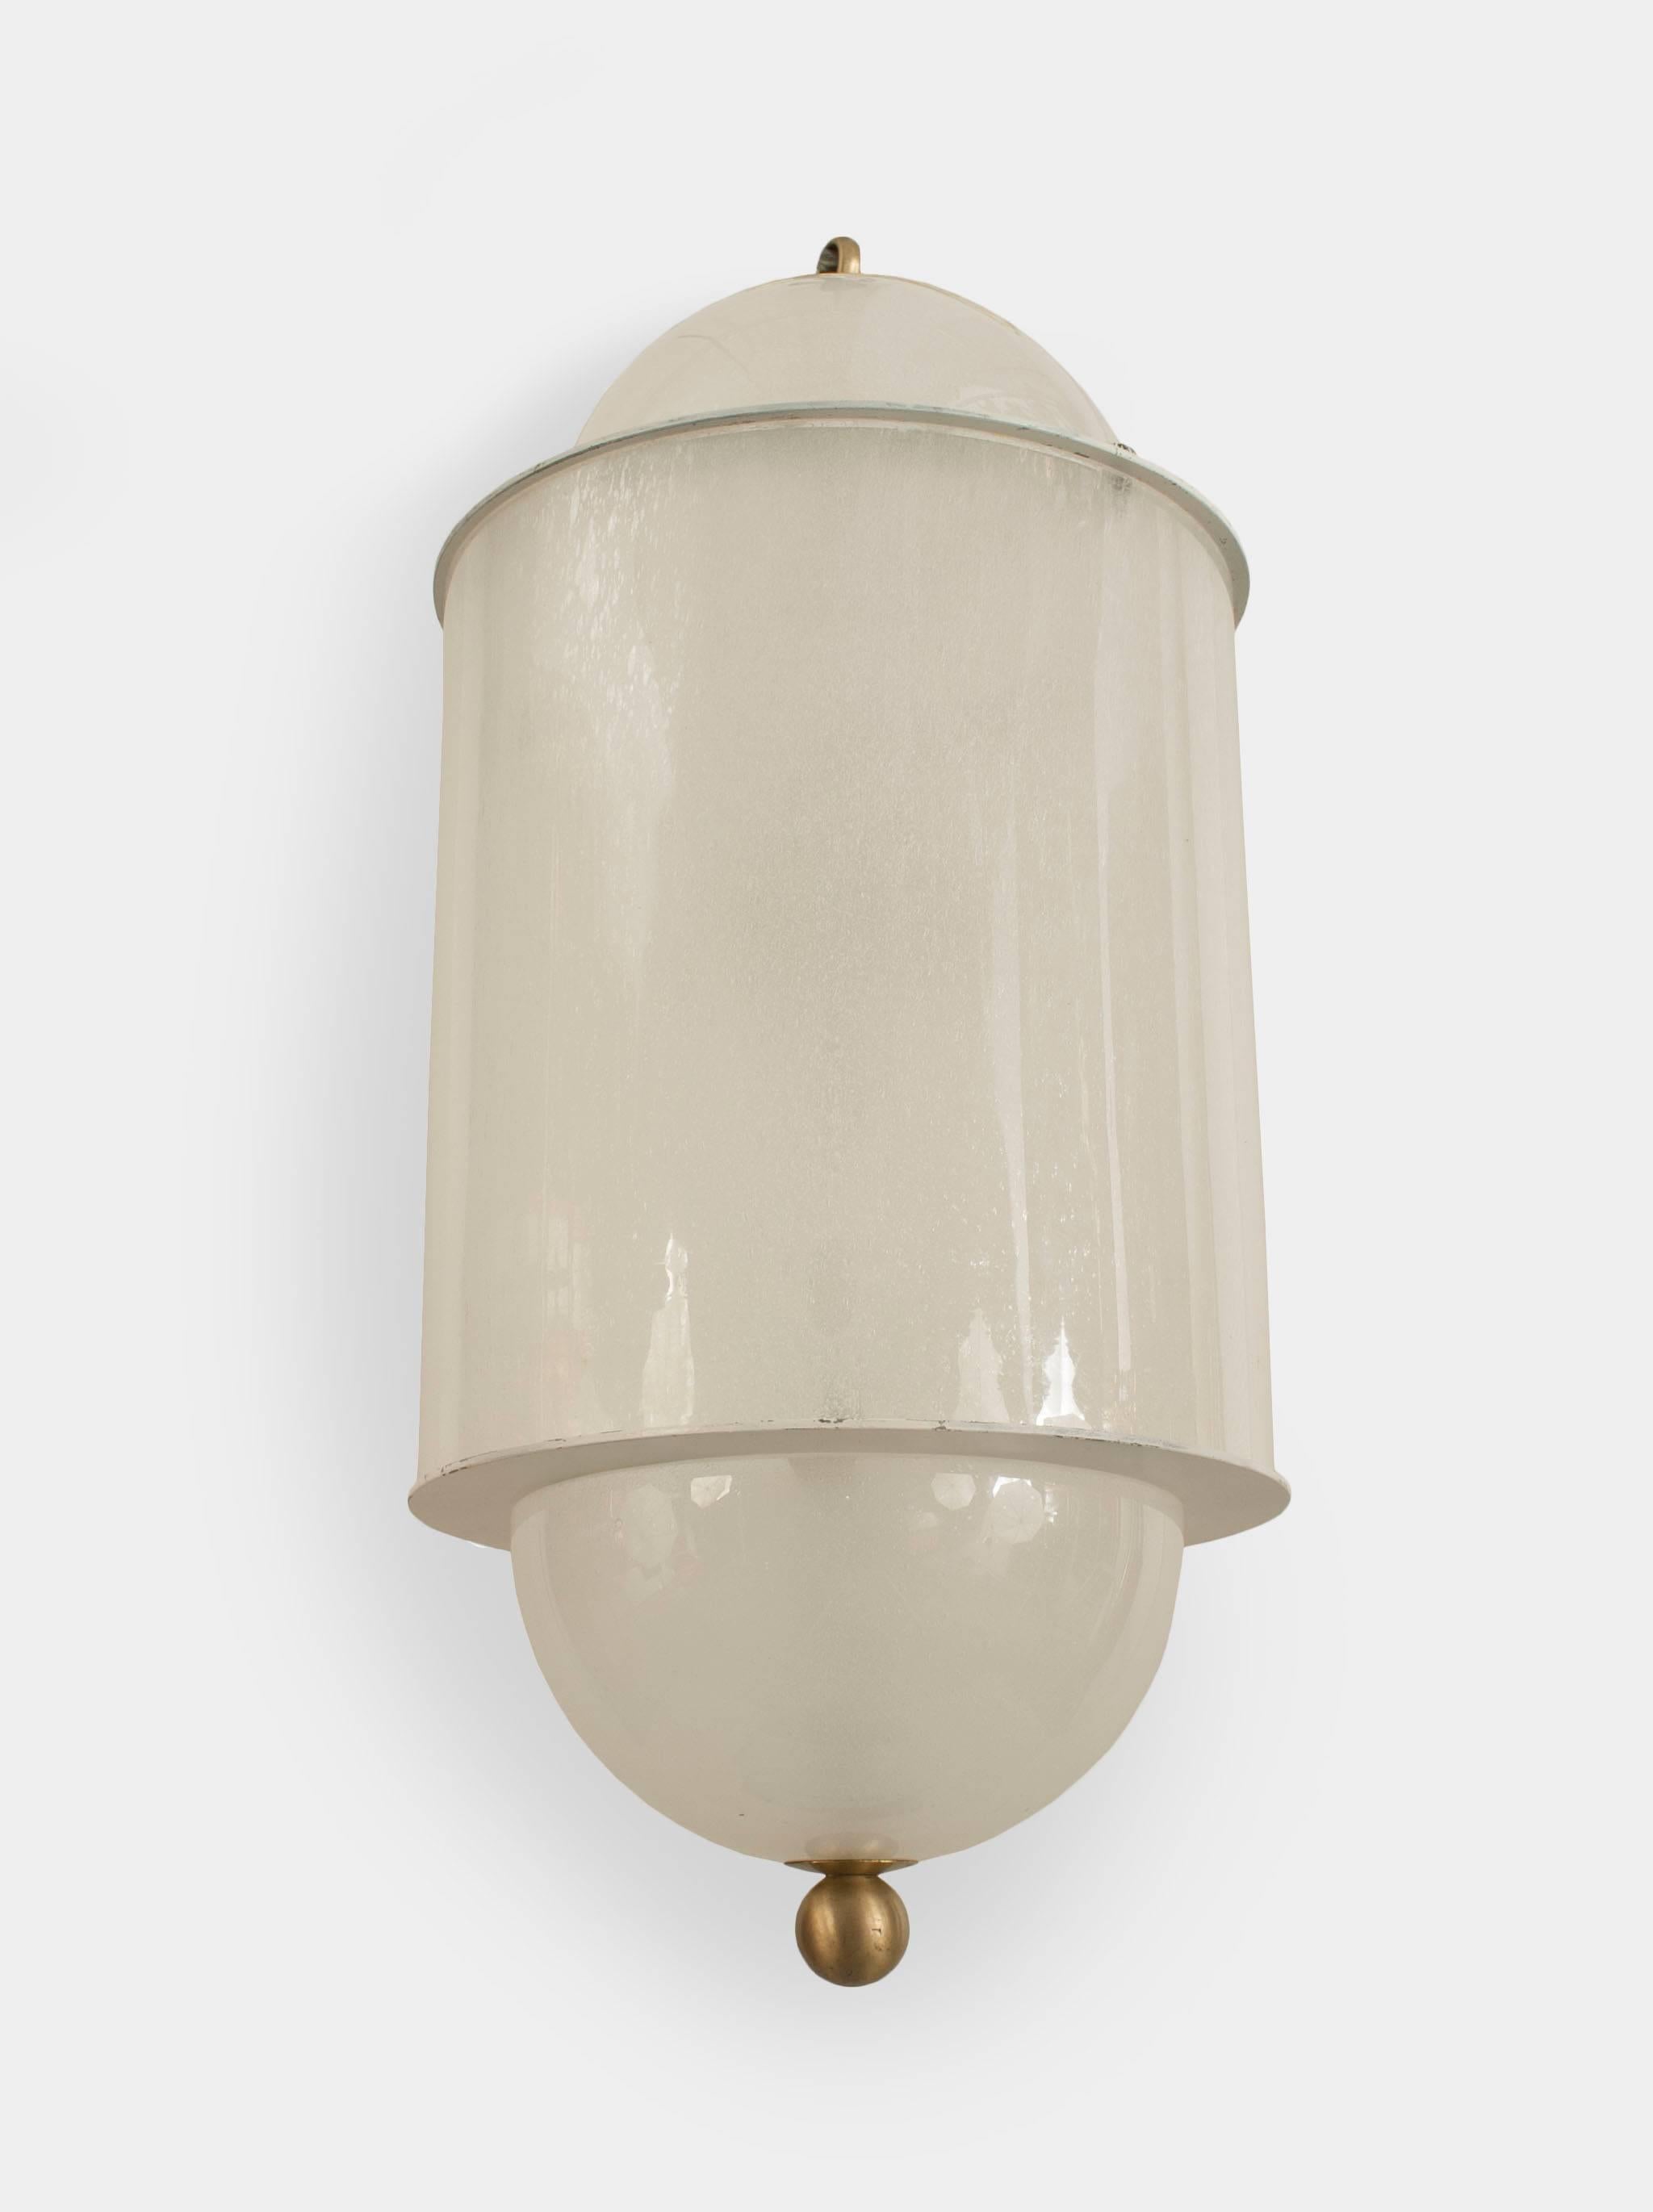 Frosted 1940s Italian Mid-Century Cylindrical Lantern